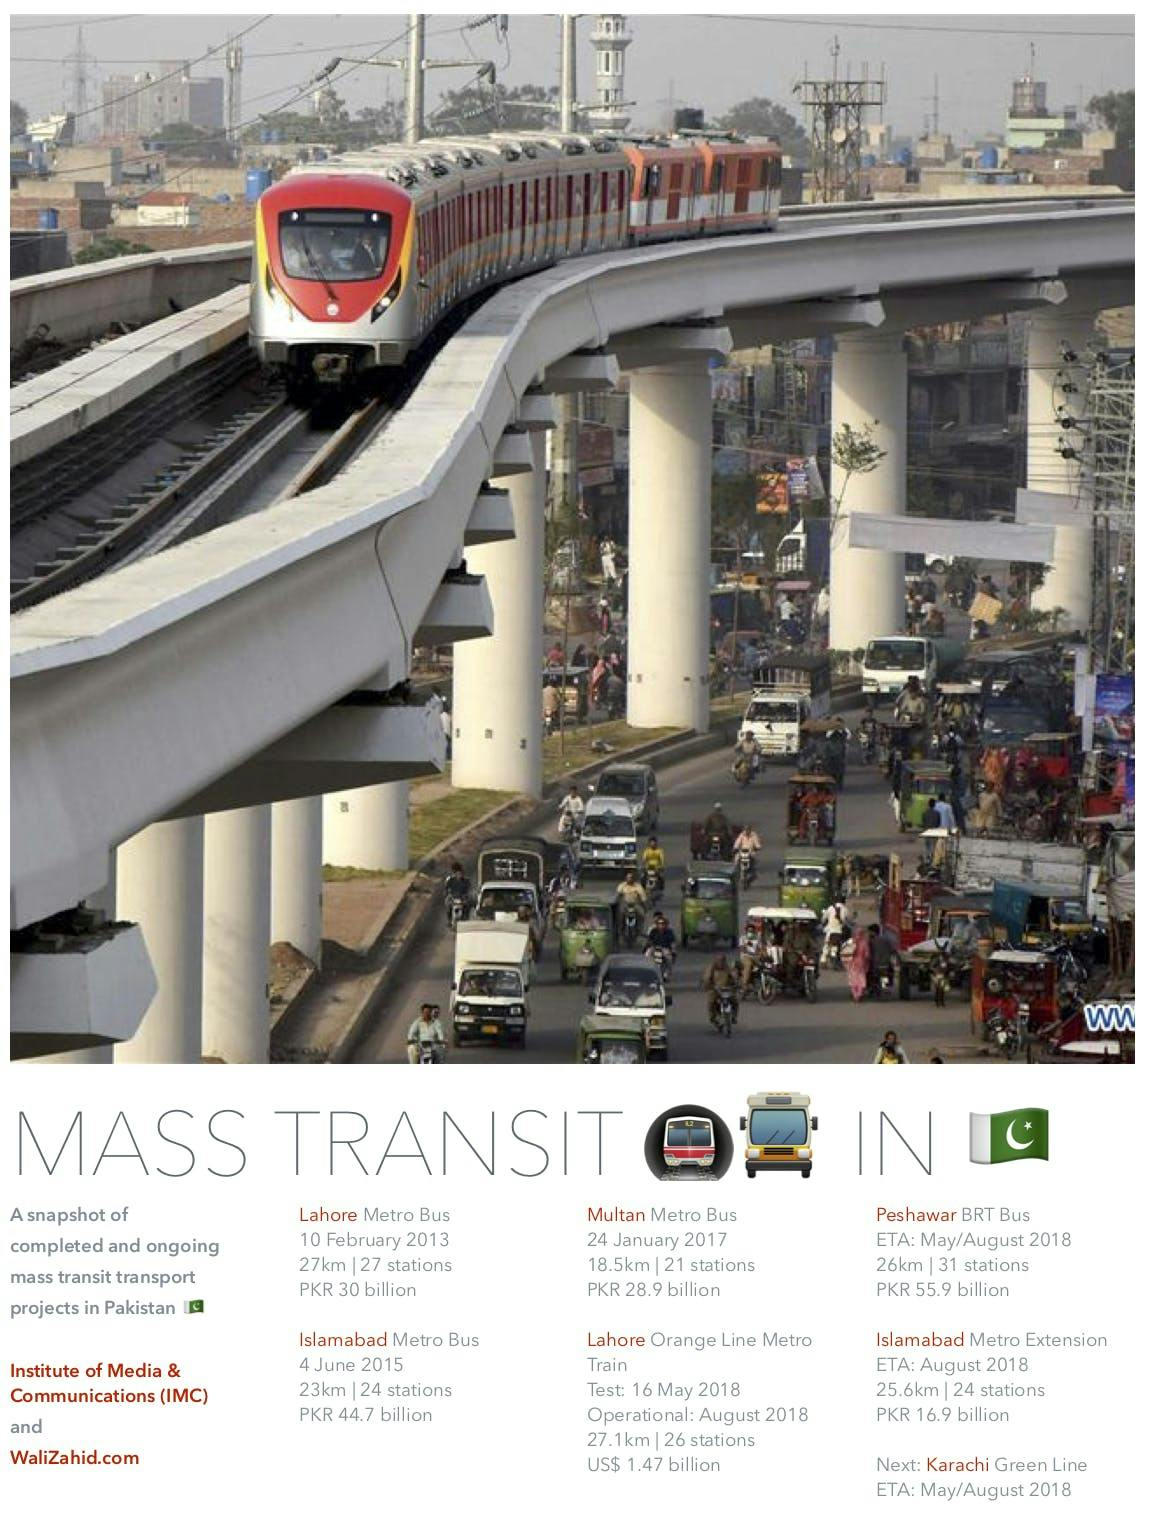 Mass-transit transport in urban Pakistan taking shape